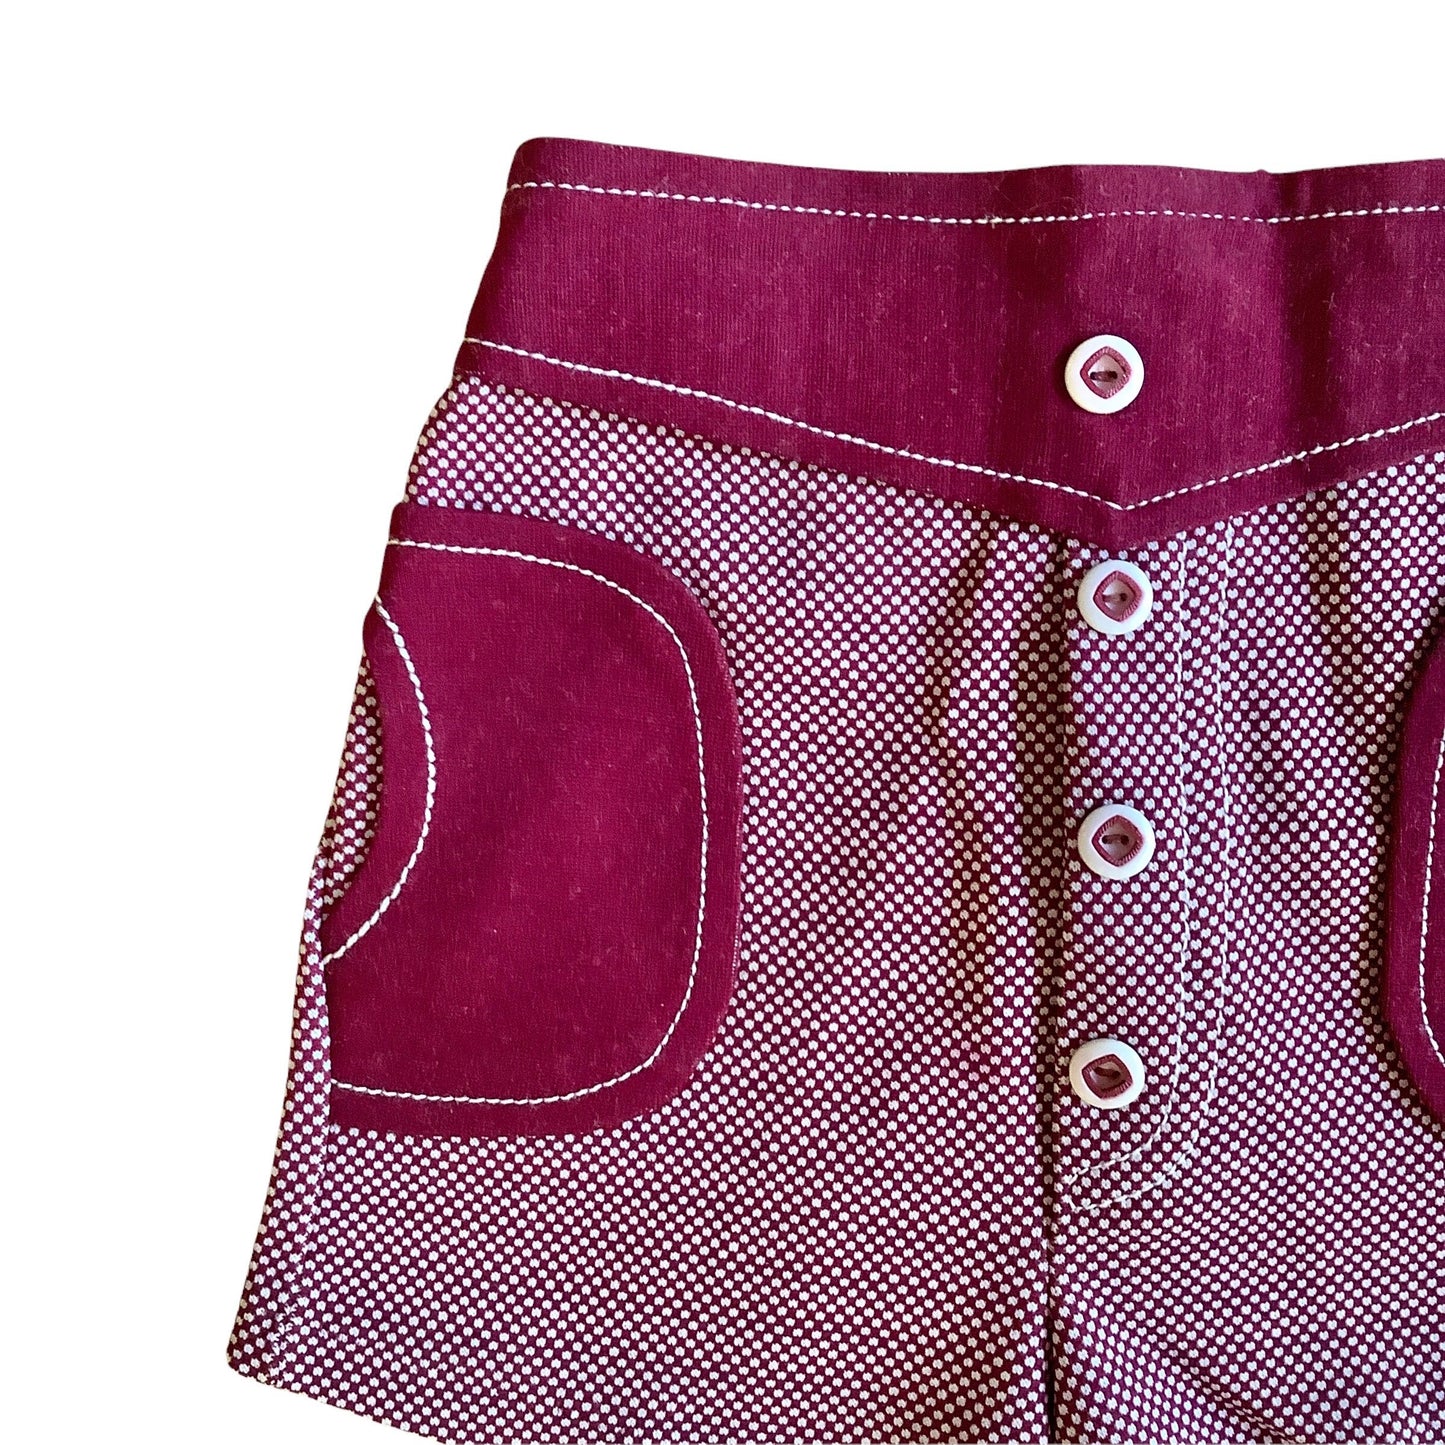 Vintage 1960s Printed Dark Red Nylon Shorts 18-24 Months